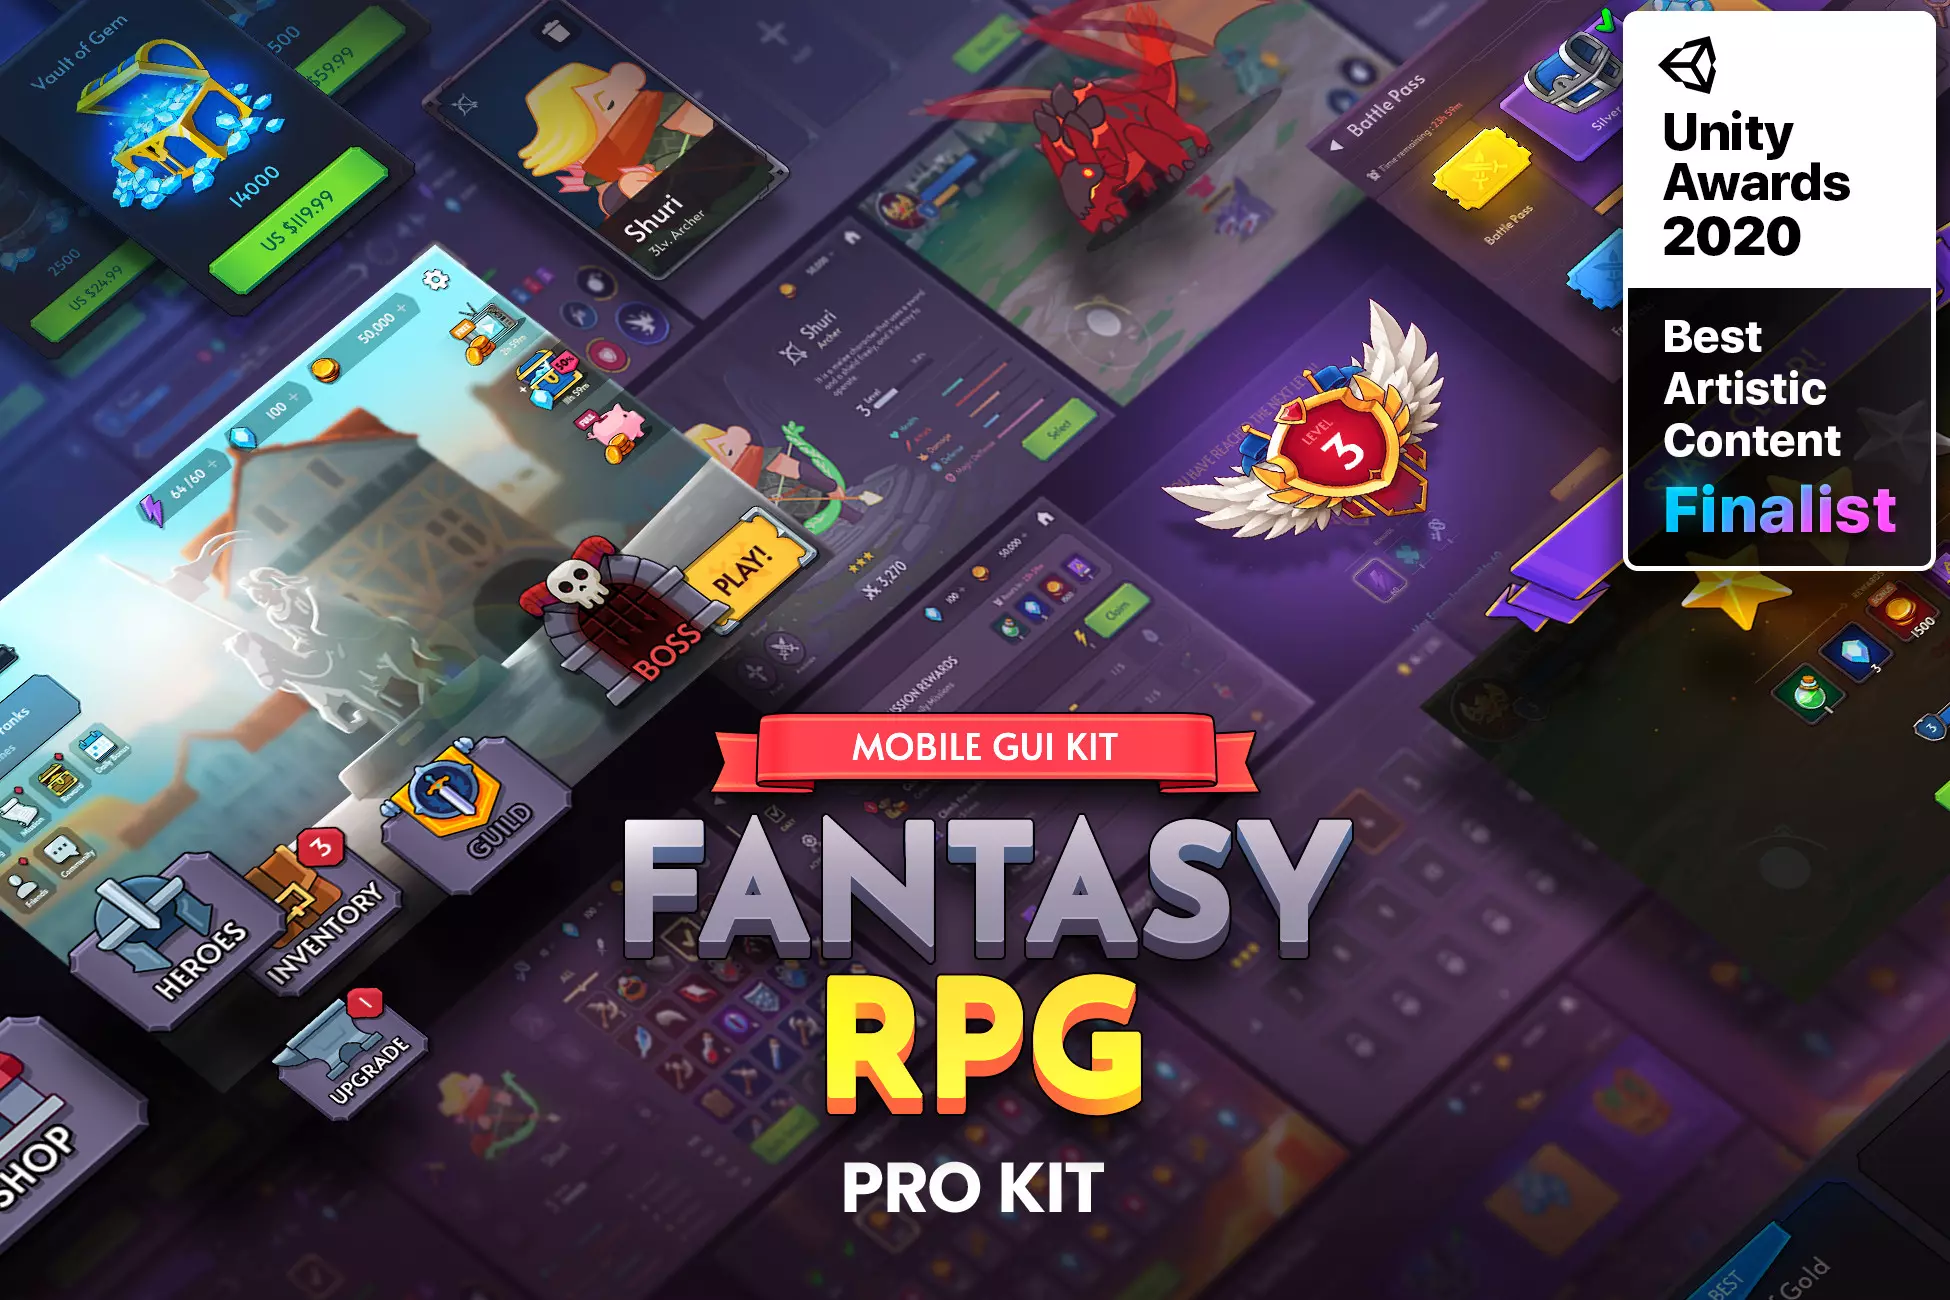 Mobile GUI PRO KIT Fantasy RPG